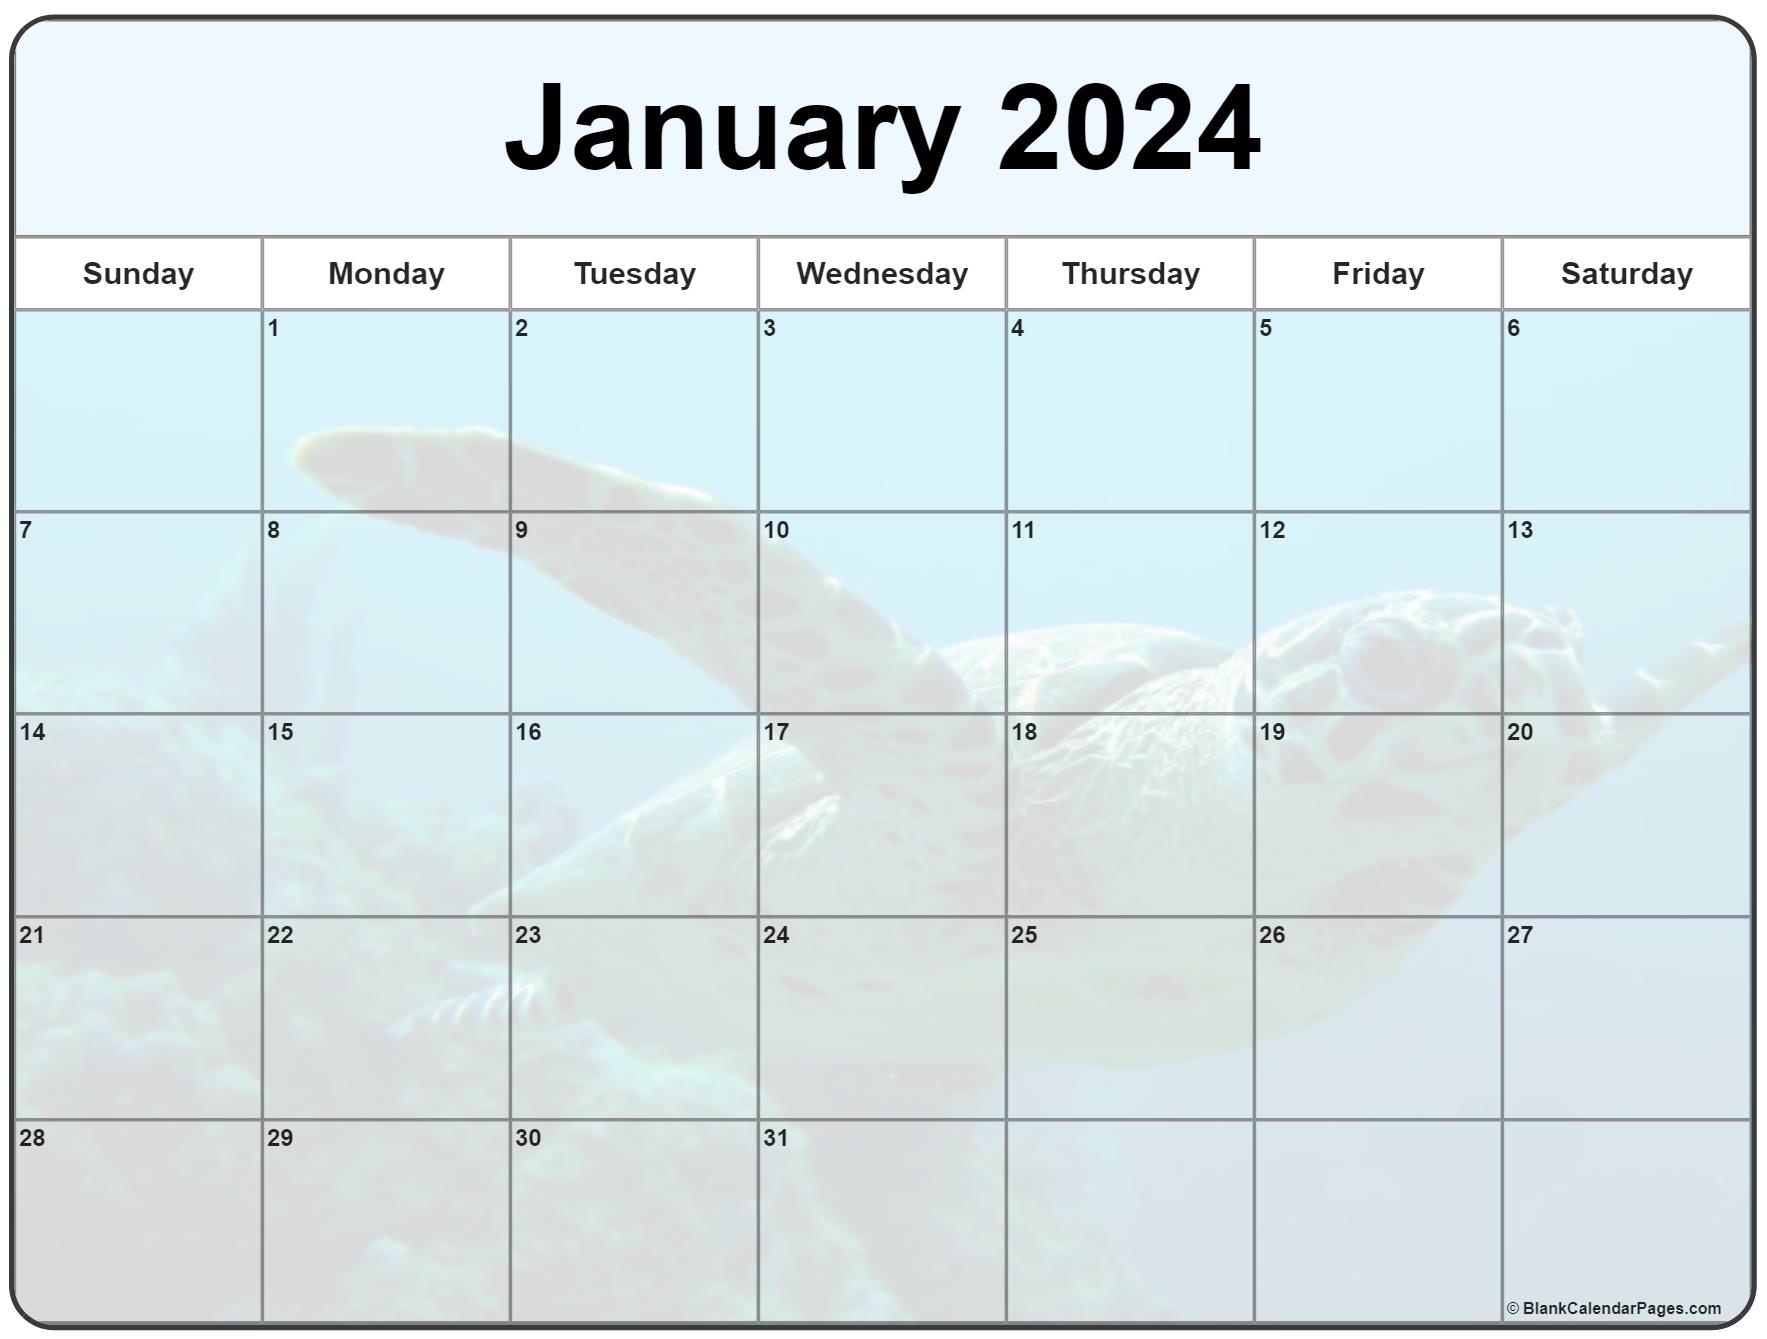 January 2024 Bir Calendar Cool Latest Incredible January 2024